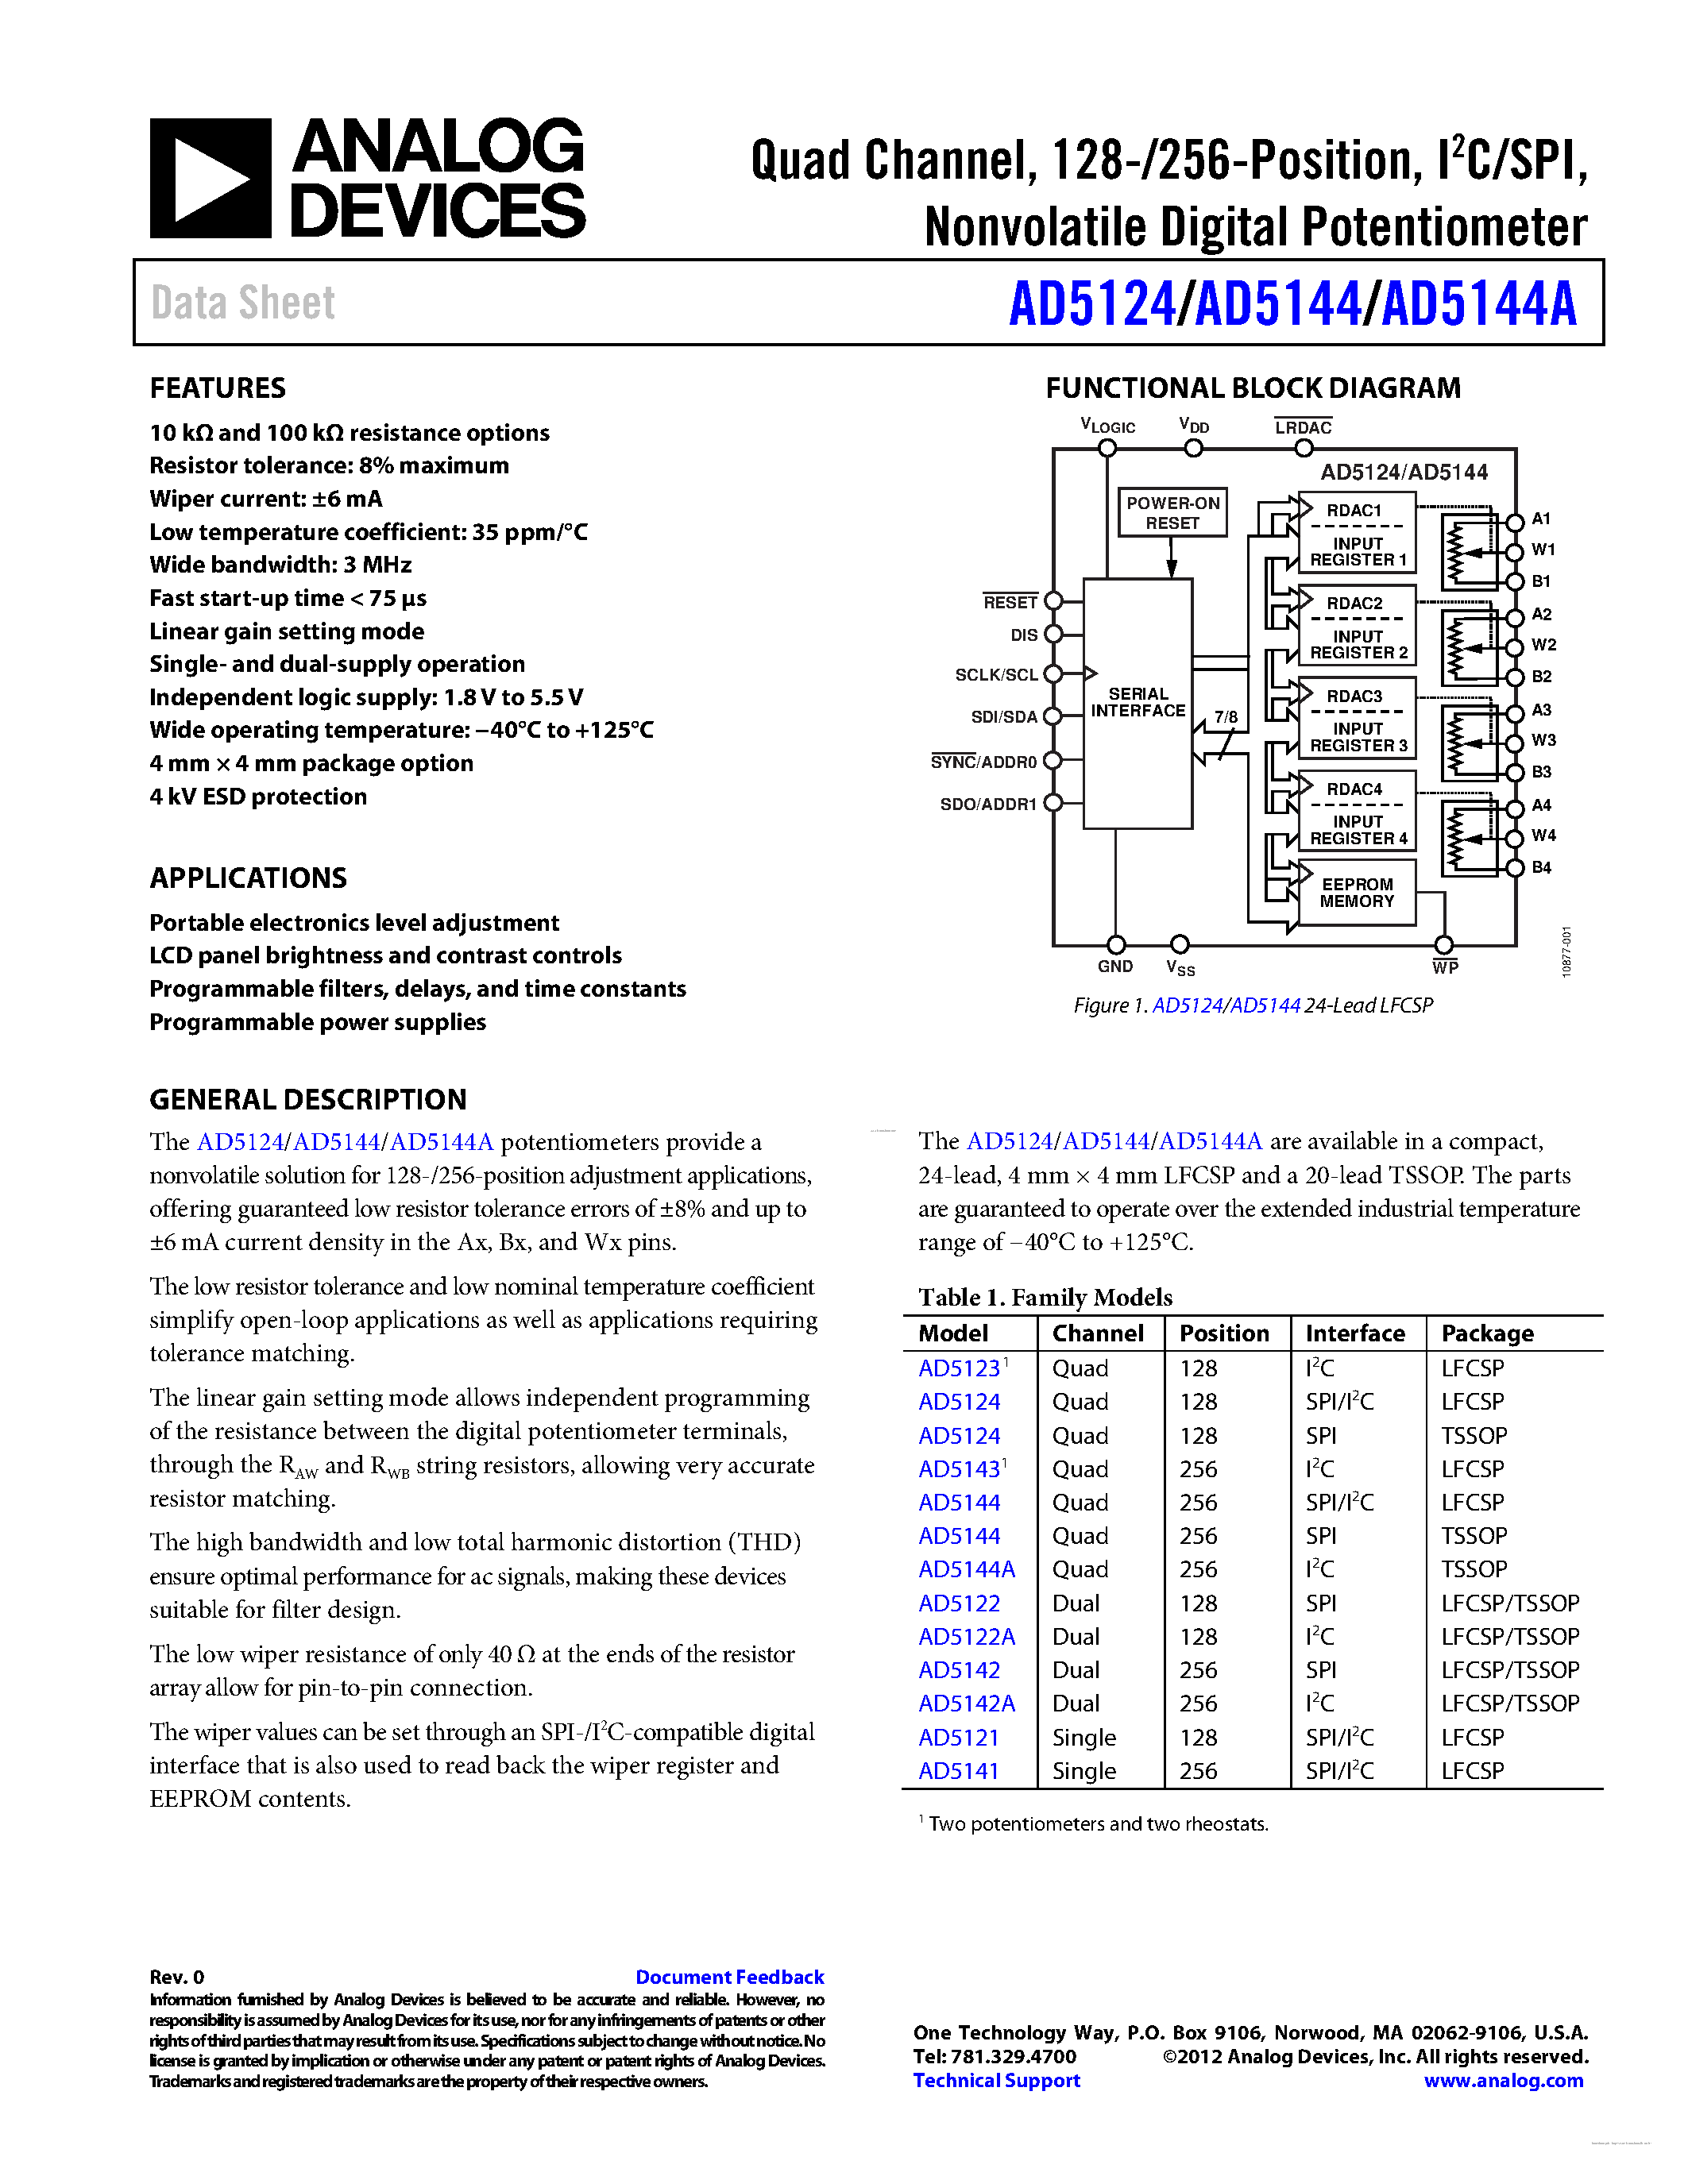 Datasheet AD5124 - page 1